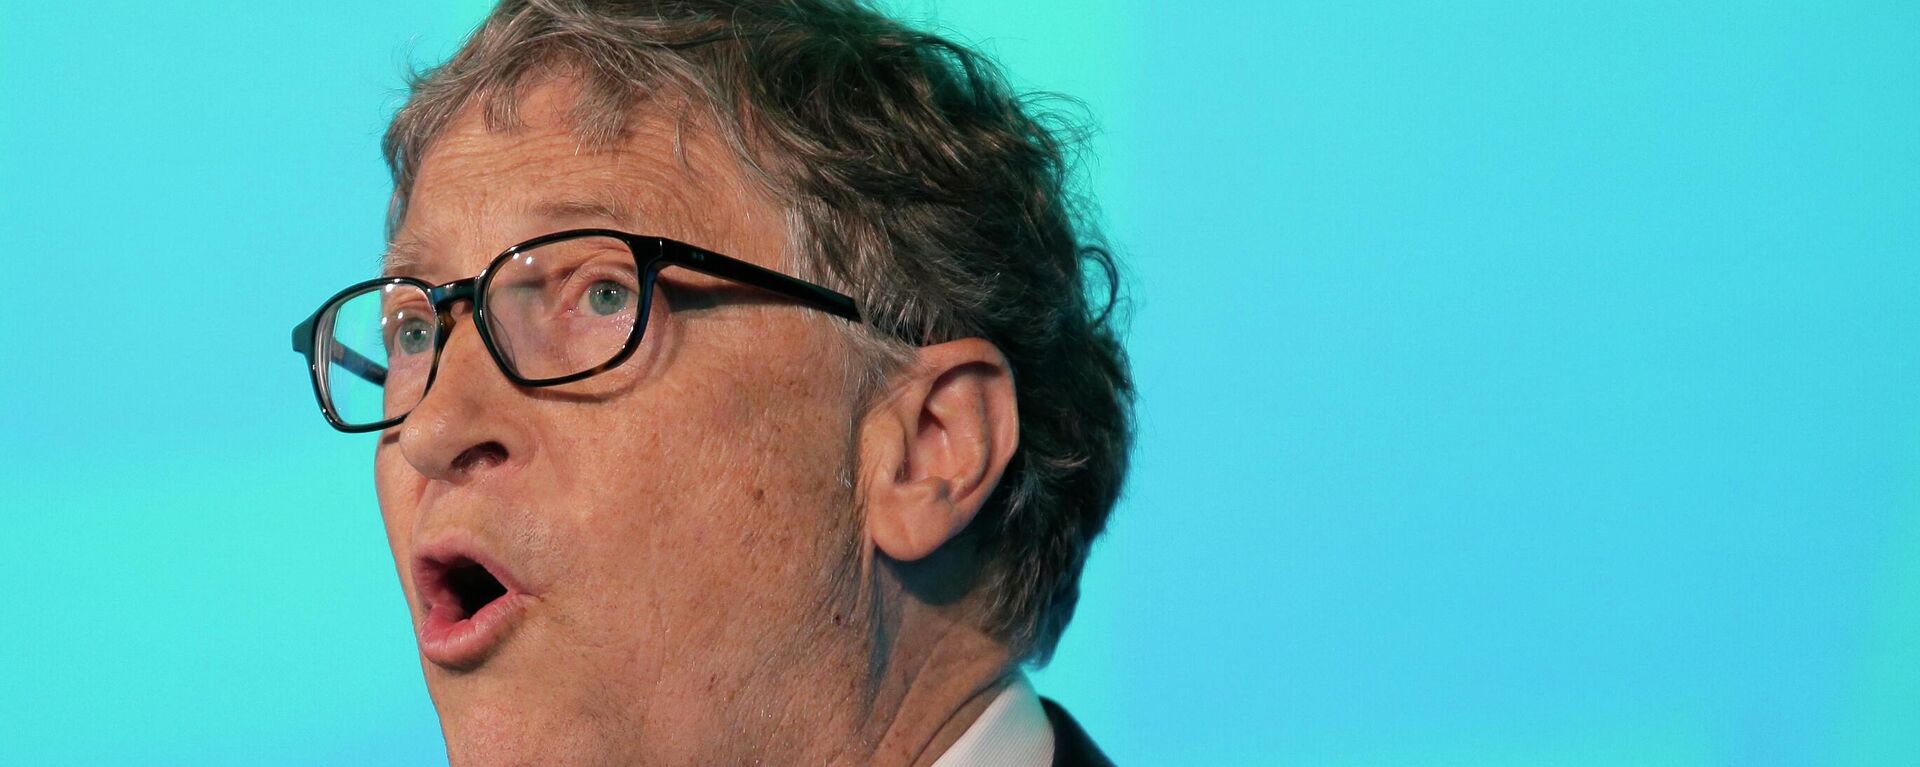 Bill Gates, cofundador de Microsoft - Sputnik Mundo, 1920, 29.10.2021